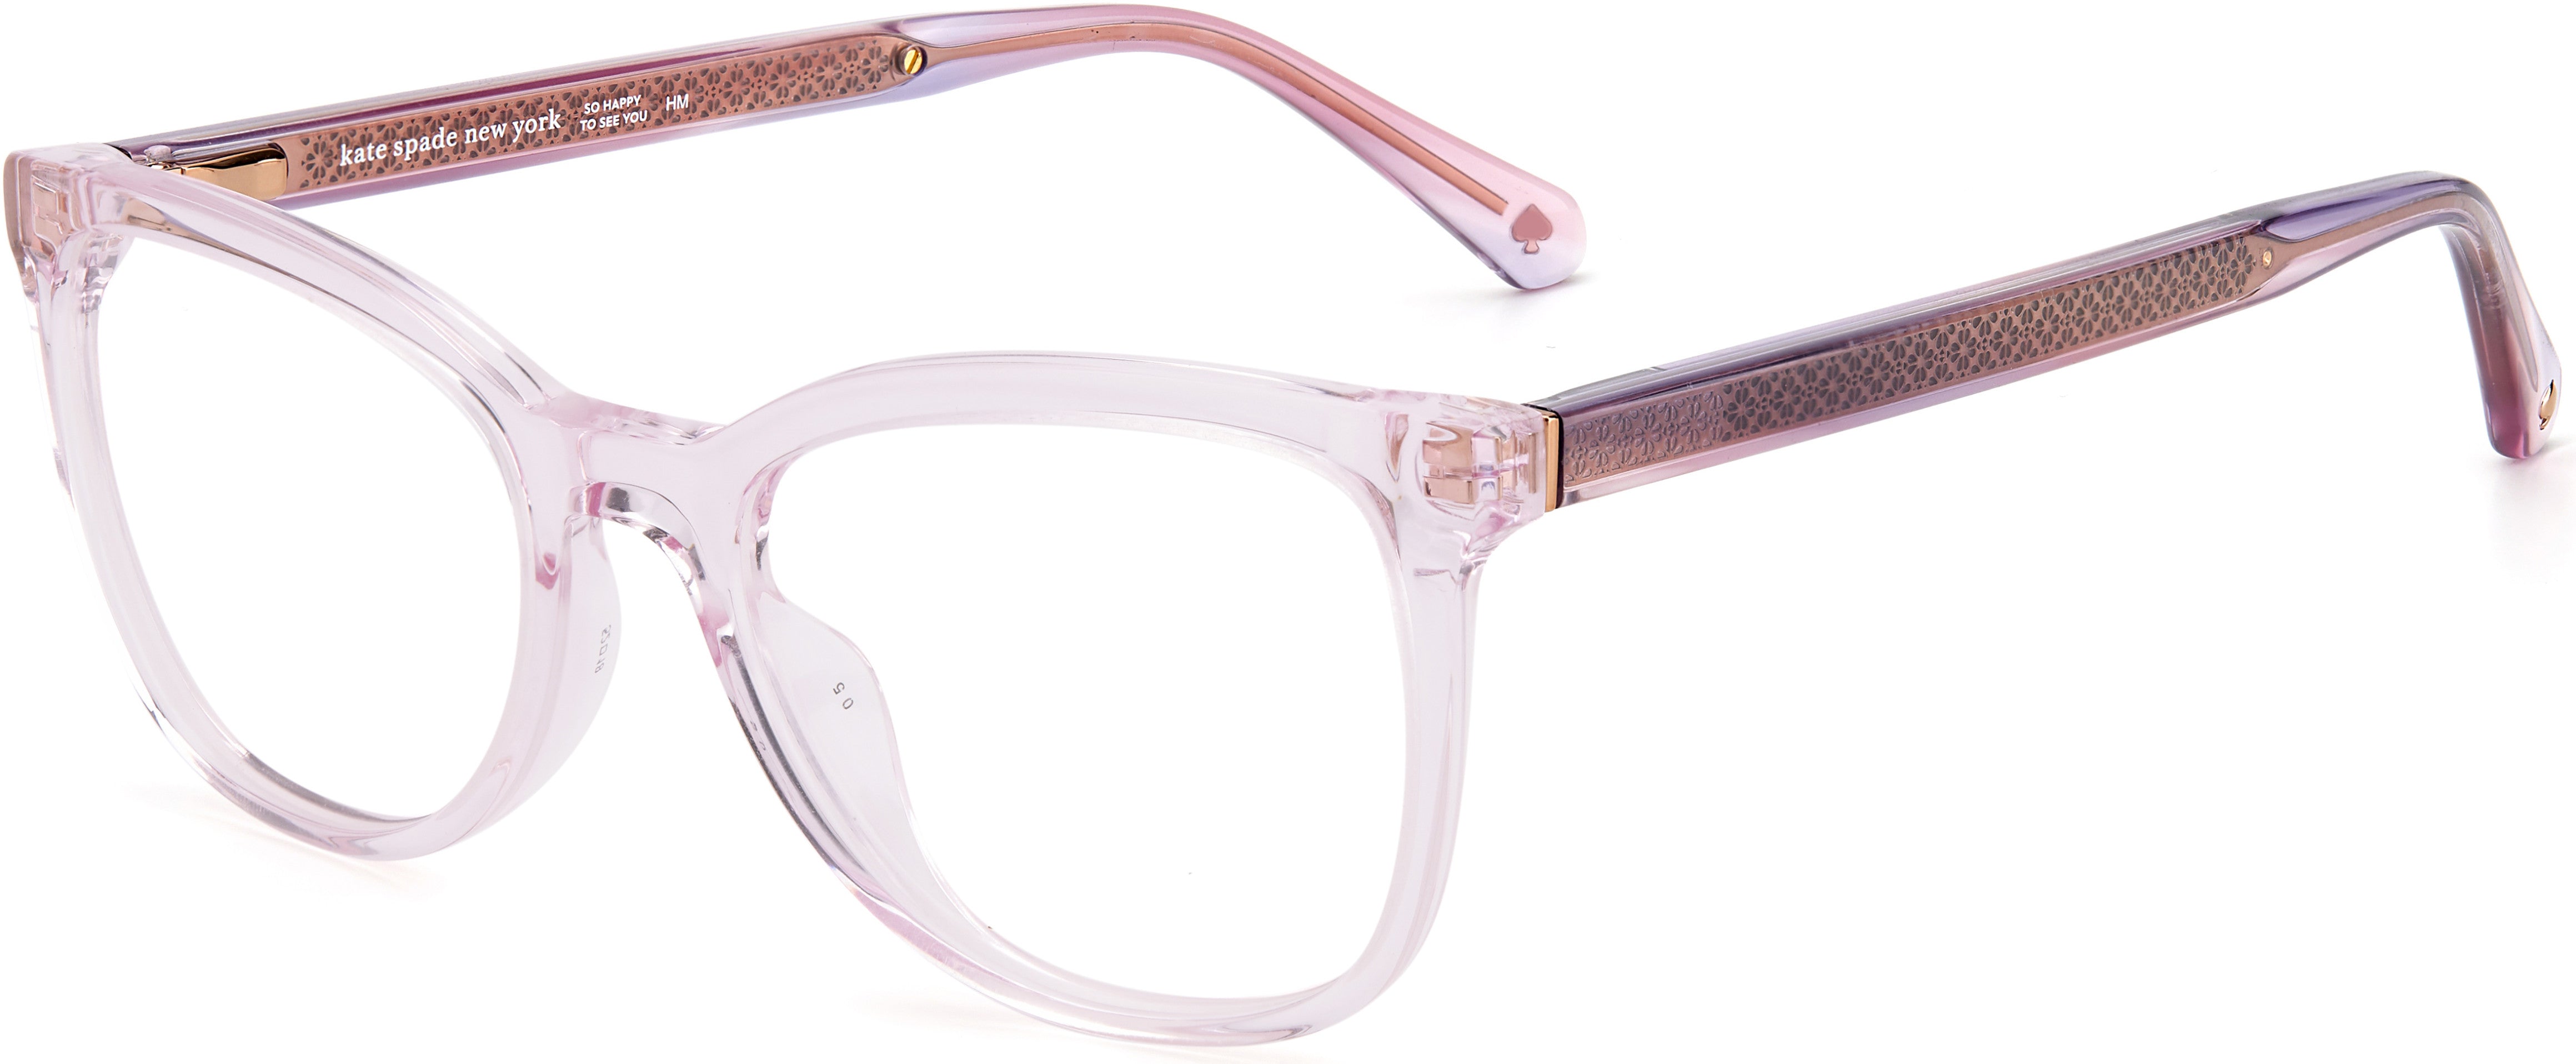 Kate Spade Sariyah Cat Eye/butterfly Eyeglasses 035J-035J  Pink (00 Demo Lens)